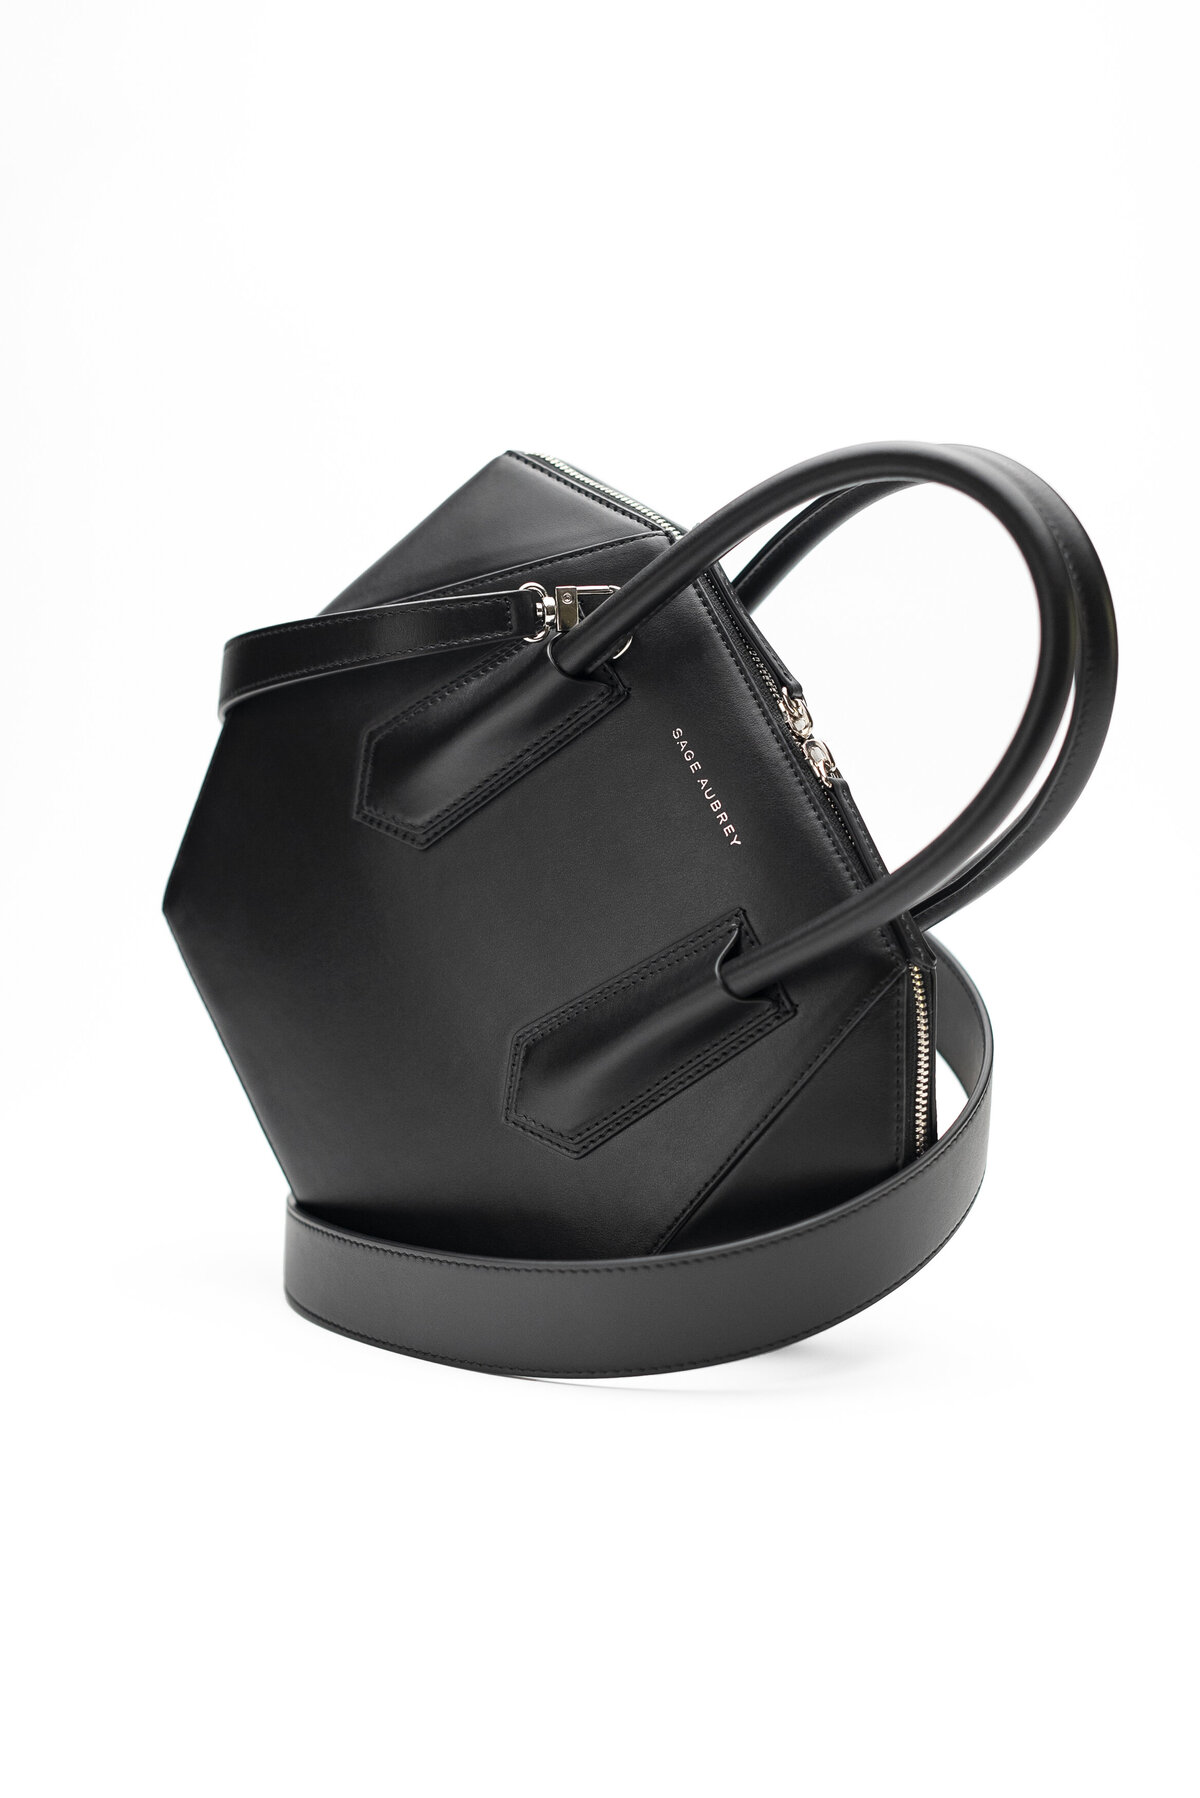 Sage Aubry geometric leather purse in Black